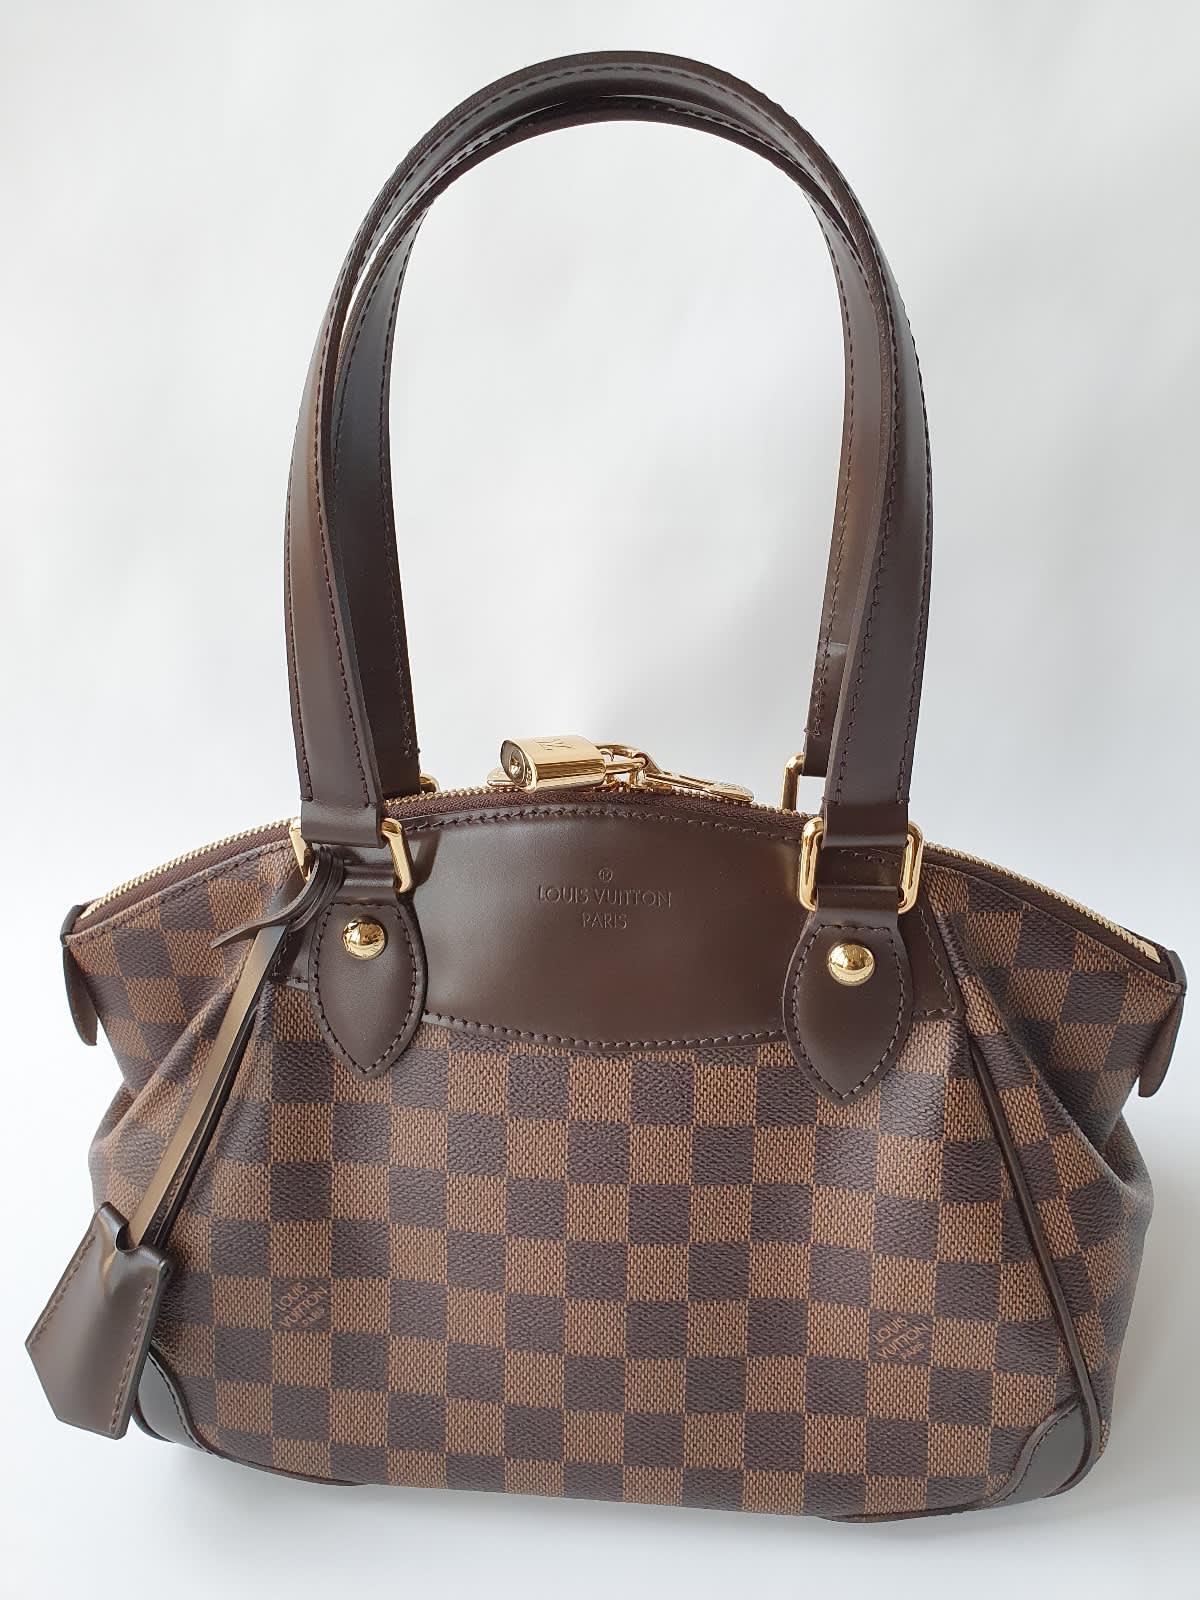 Louis Vuitton shopping bag 2022 SeeLV just $50, Bags, Gumtree Australia  Manningham Area - Doncaster